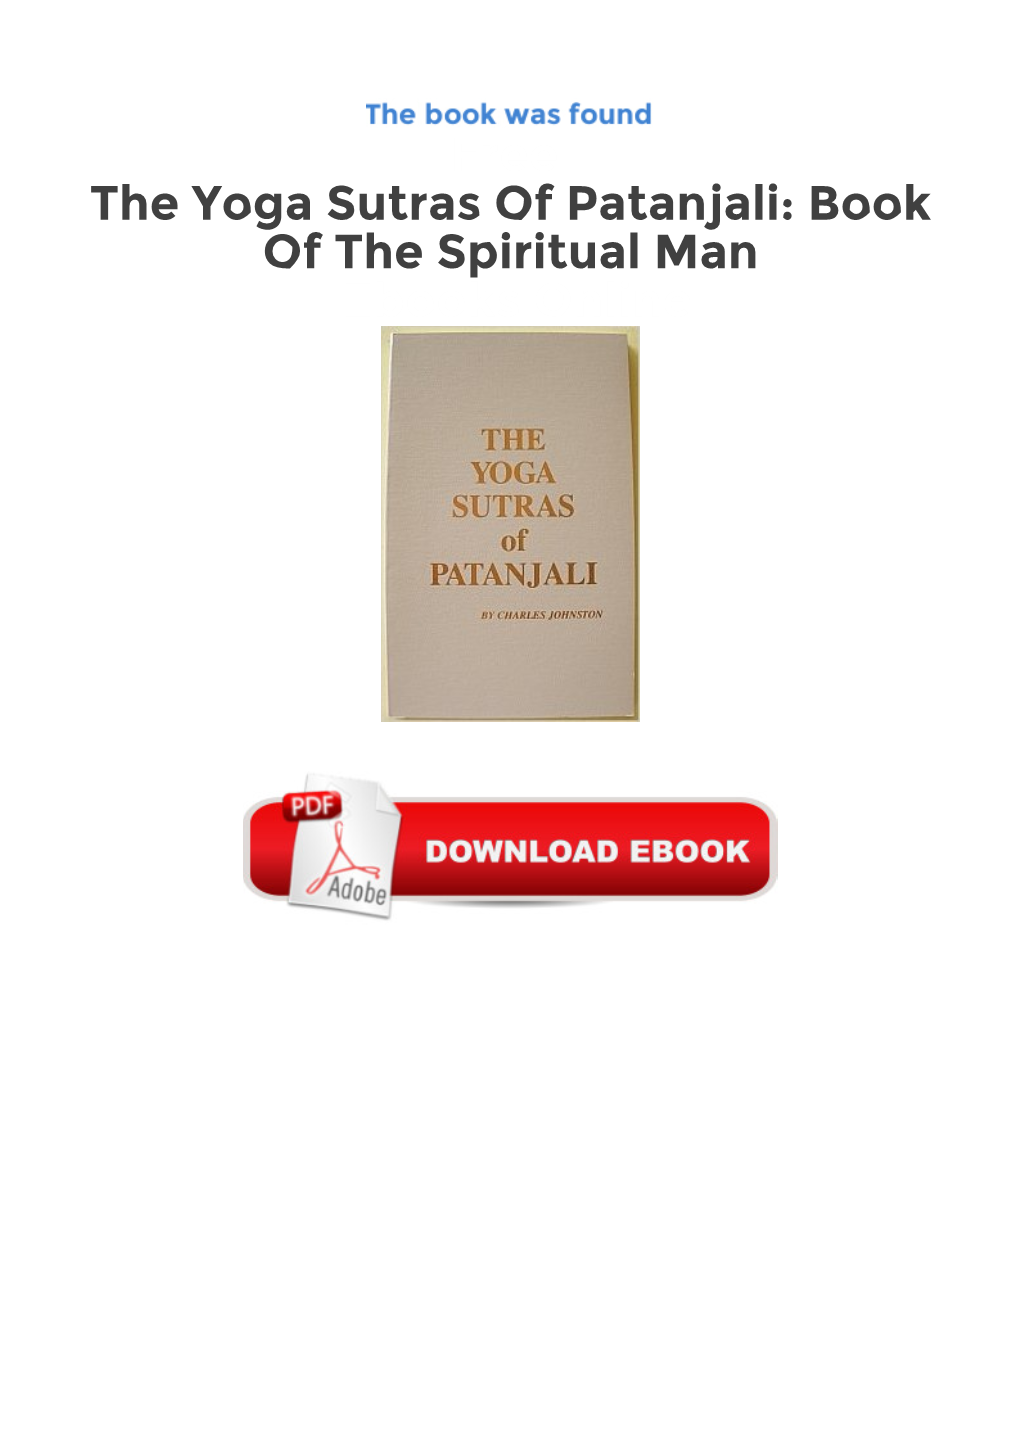 Free the Yoga Sutras of Patanjali: Book of the Spiritual Man Ebooks